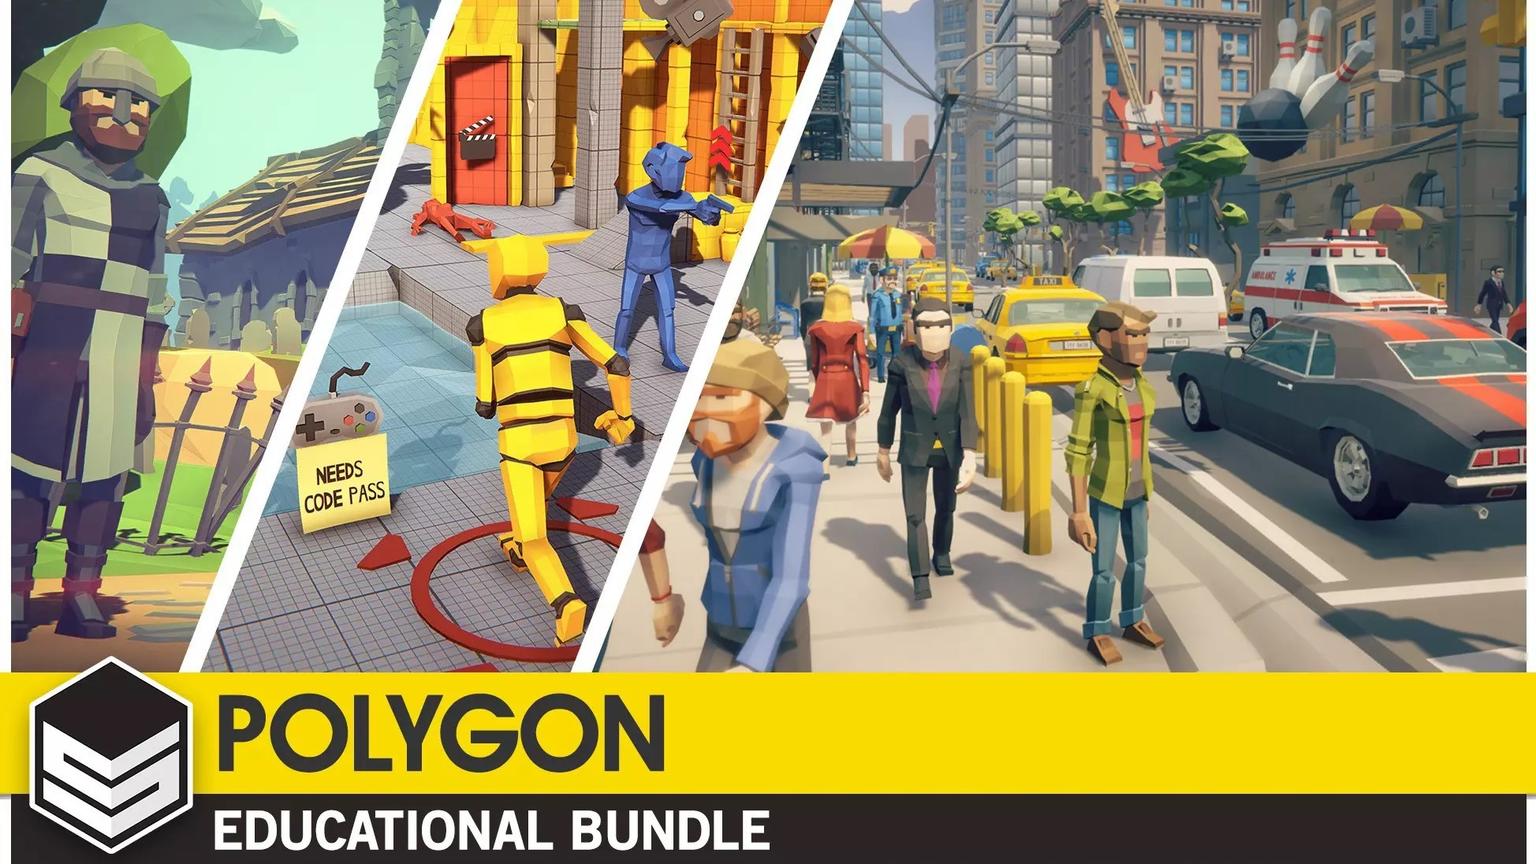 Polygon educational bundle